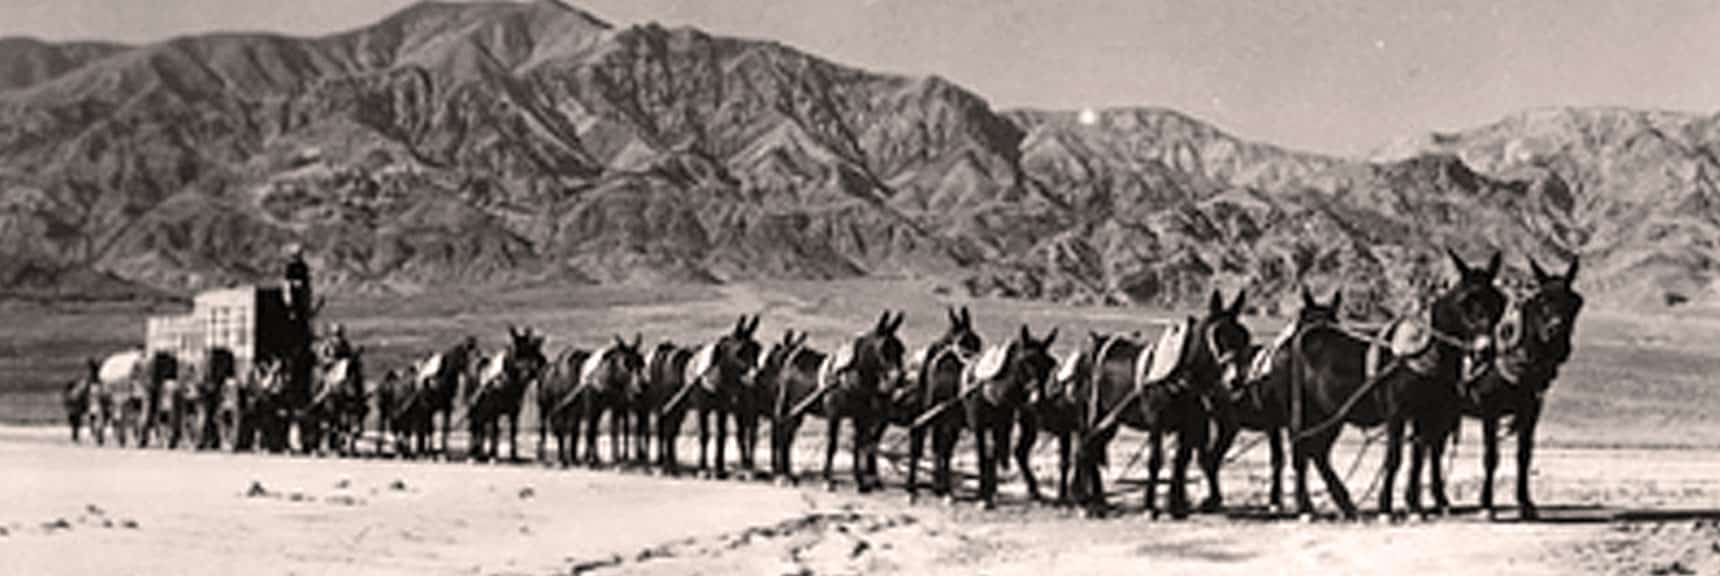 Twenty Mule Team Canyon | Death Valley, California